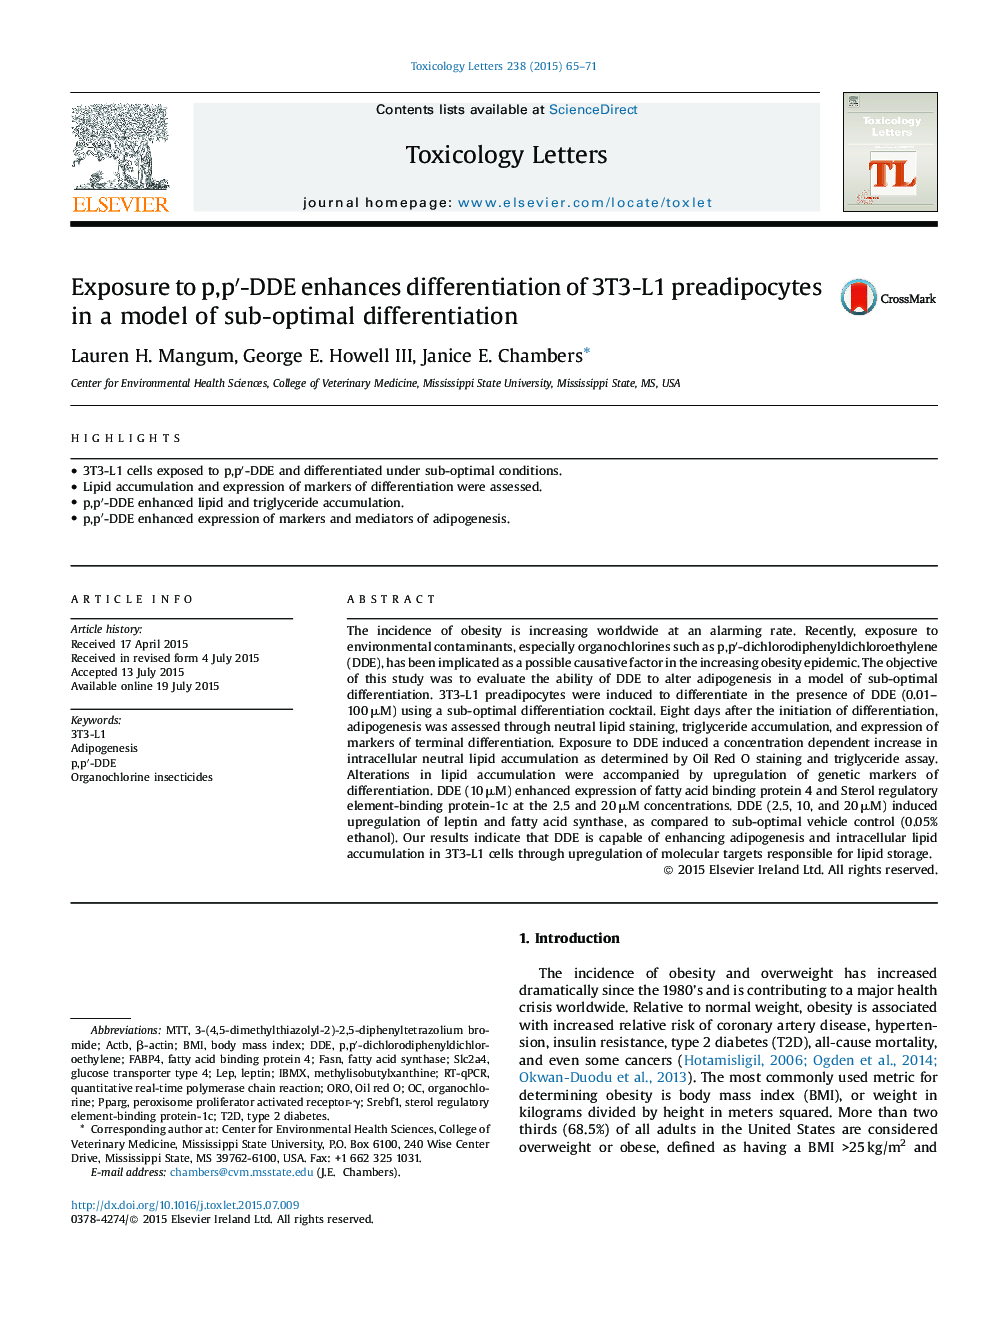 Exposure to p,pâ²-DDE enhances differentiation of 3T3-L1 preadipocytes in a model of sub-optimal differentiation